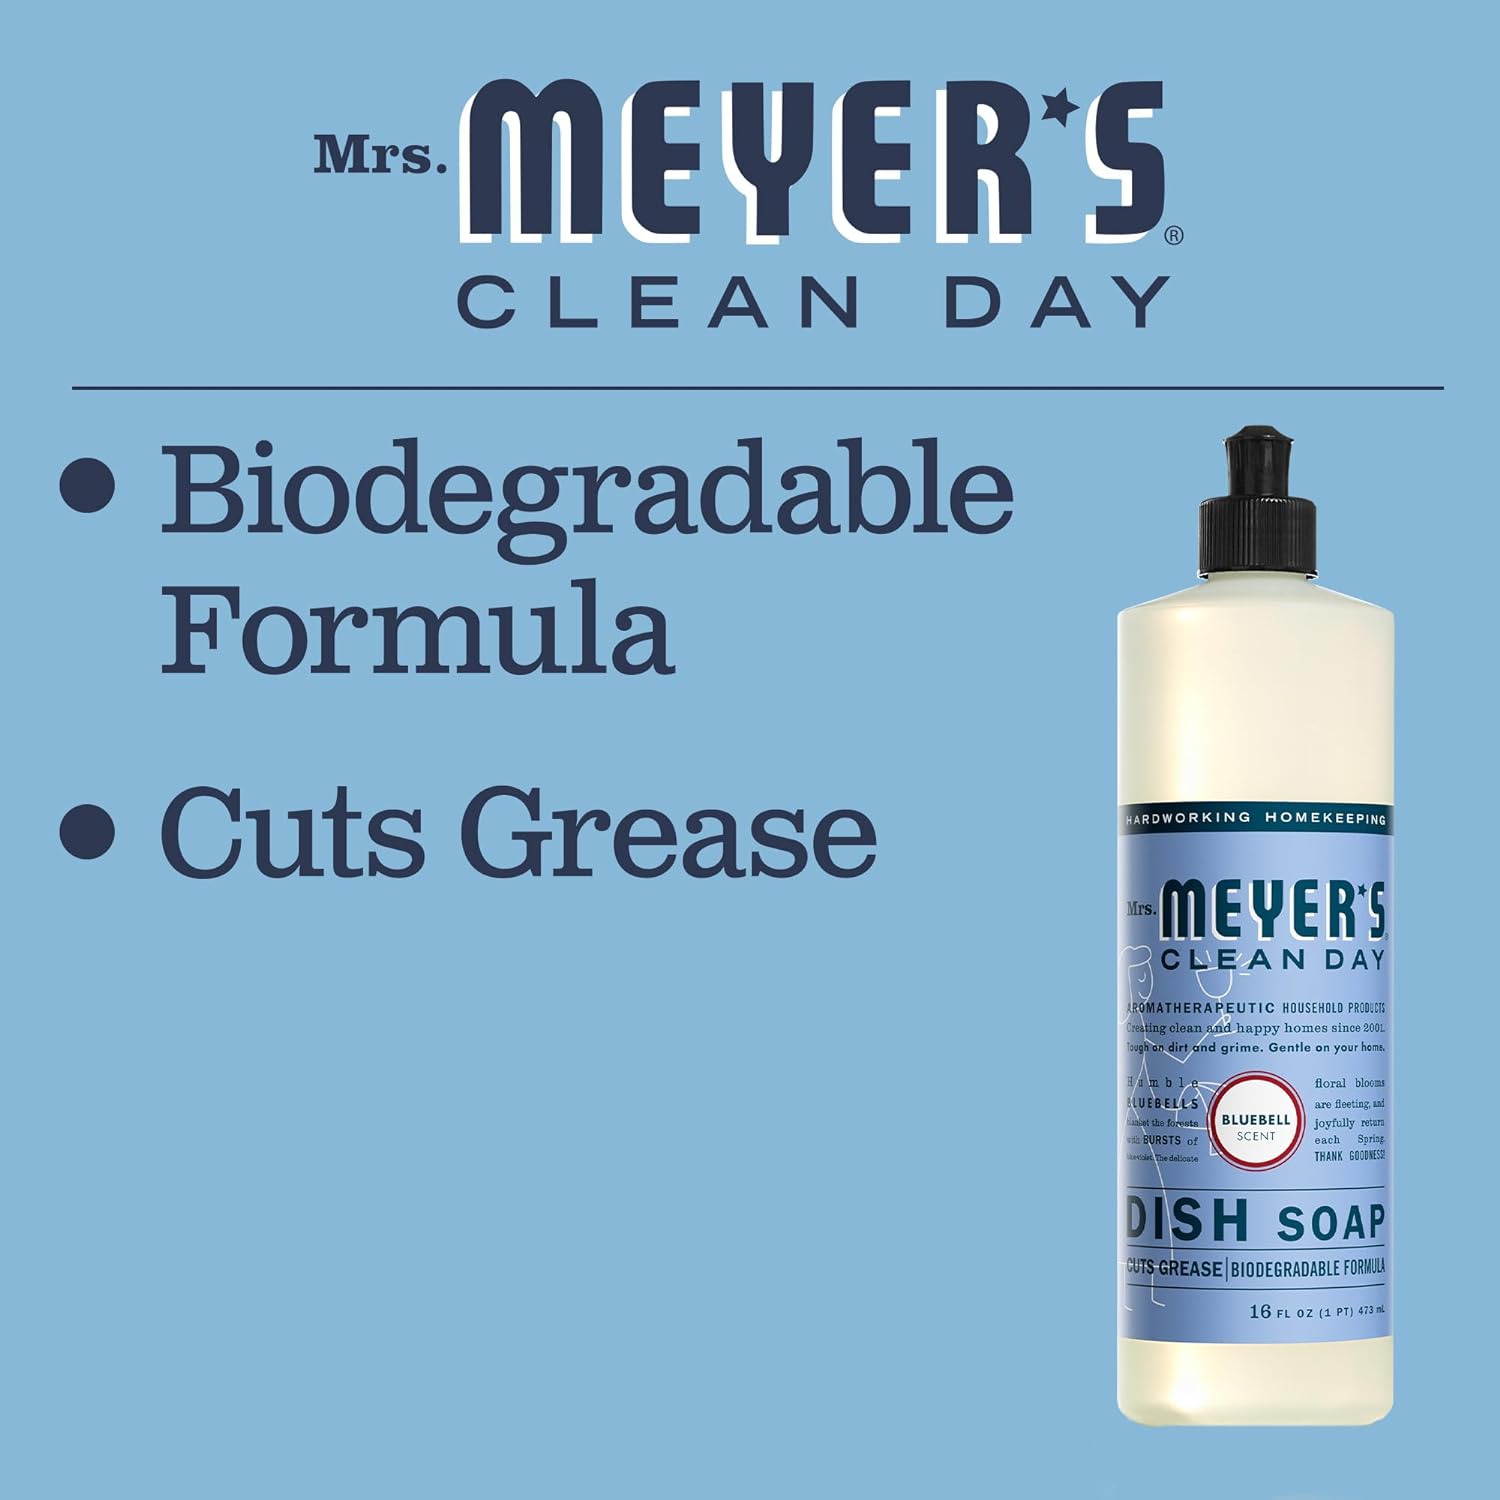 Mrs. Meyer's Clean Day Liquid Dish Soap, Bluebell Scent, 16 Fl Oz bottle (Pack of 1) : Health & Household